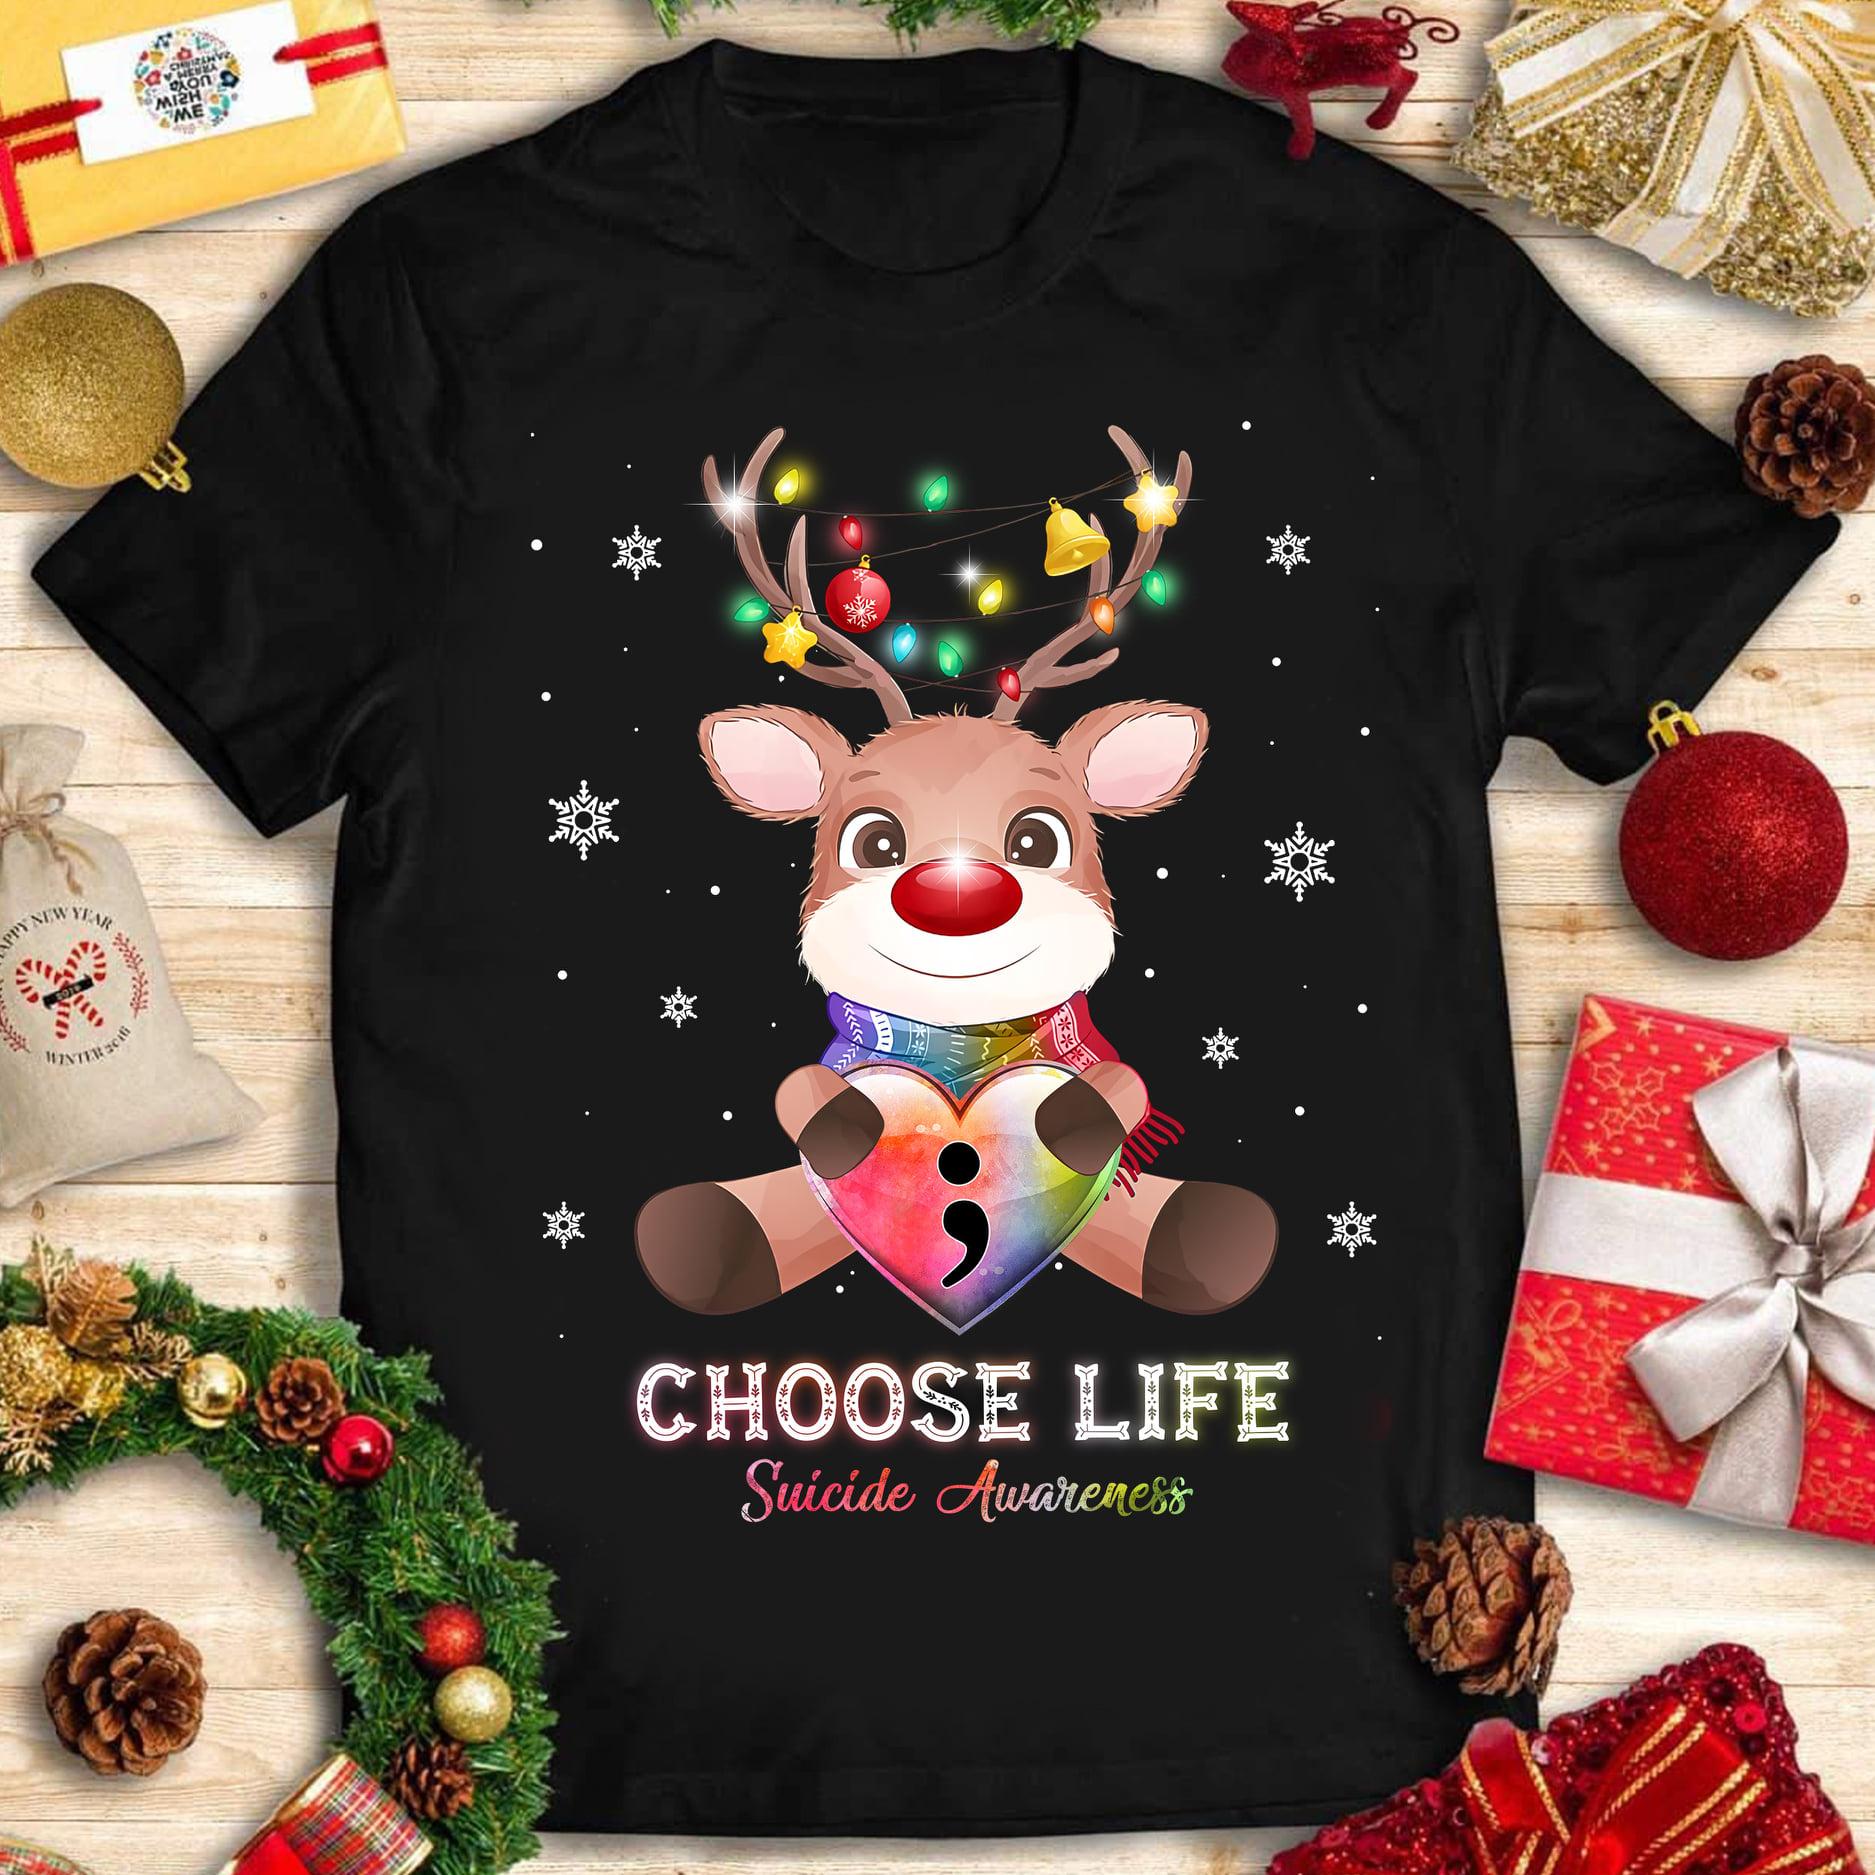 Choose life - Suicide awareness, Christmas reindeer suicide awareness, Christmas day ugly sweater